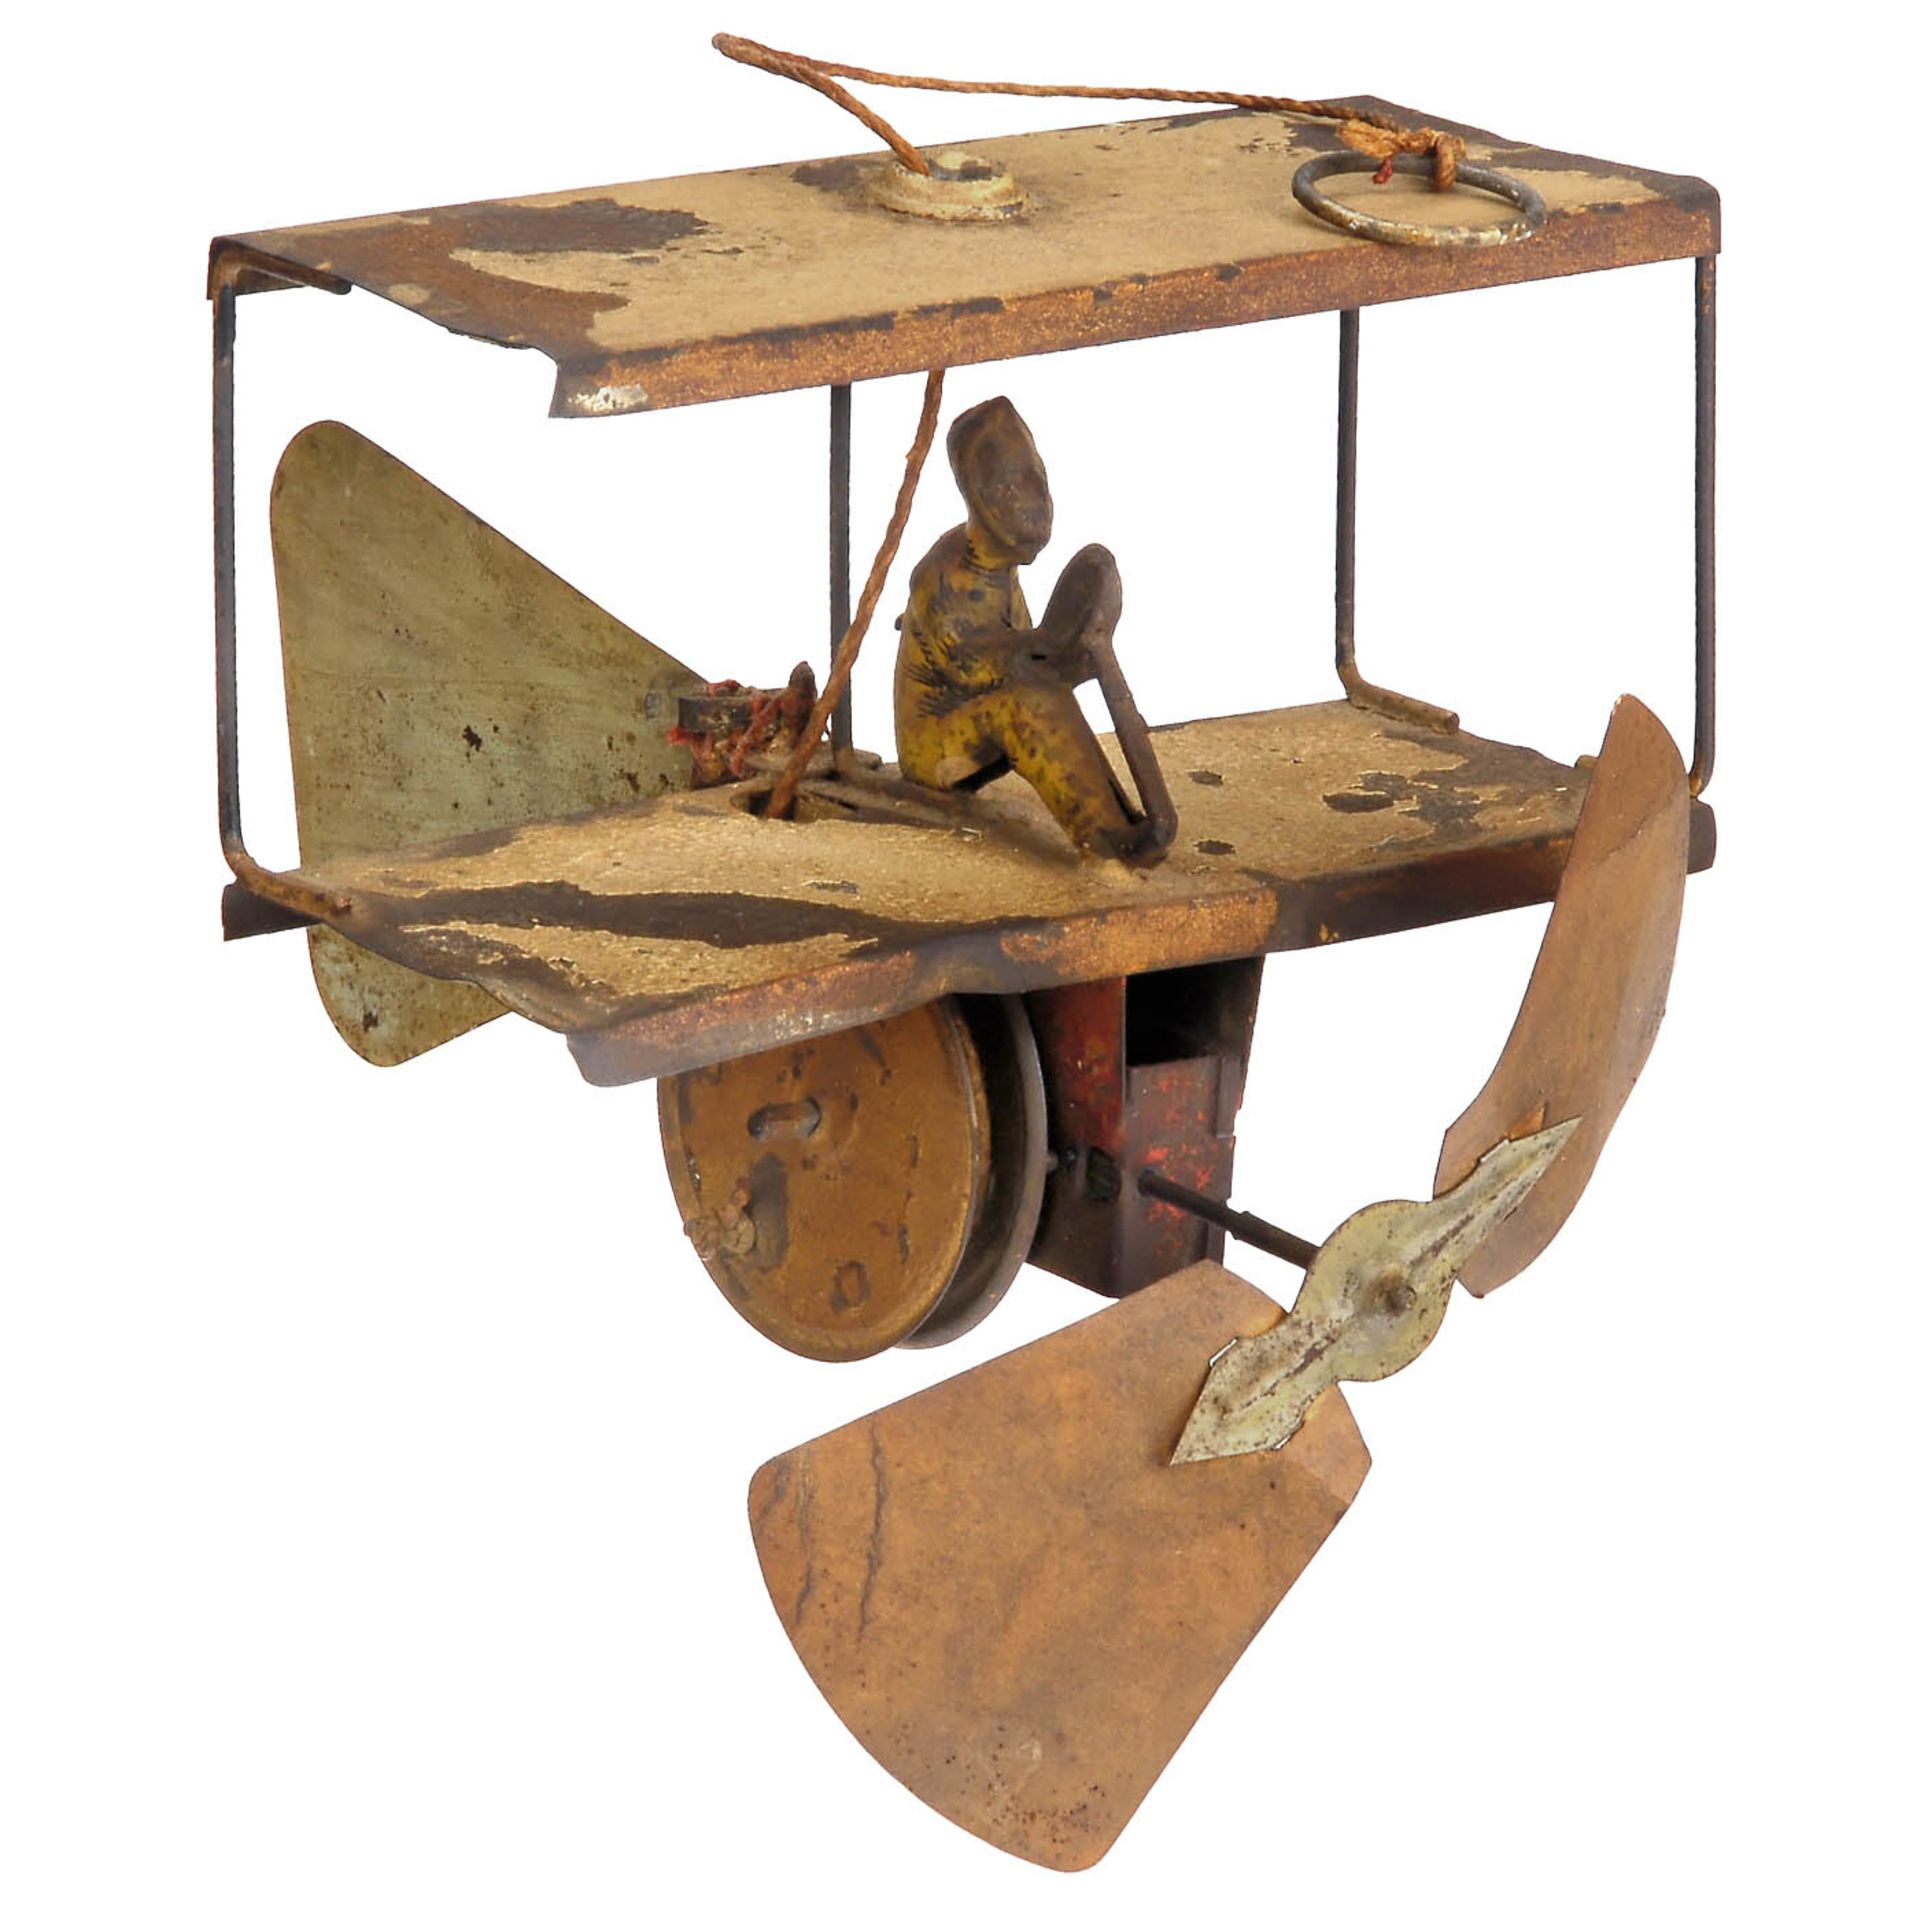 Tin Toy Biplane, c. 1900 - Image 2 of 2